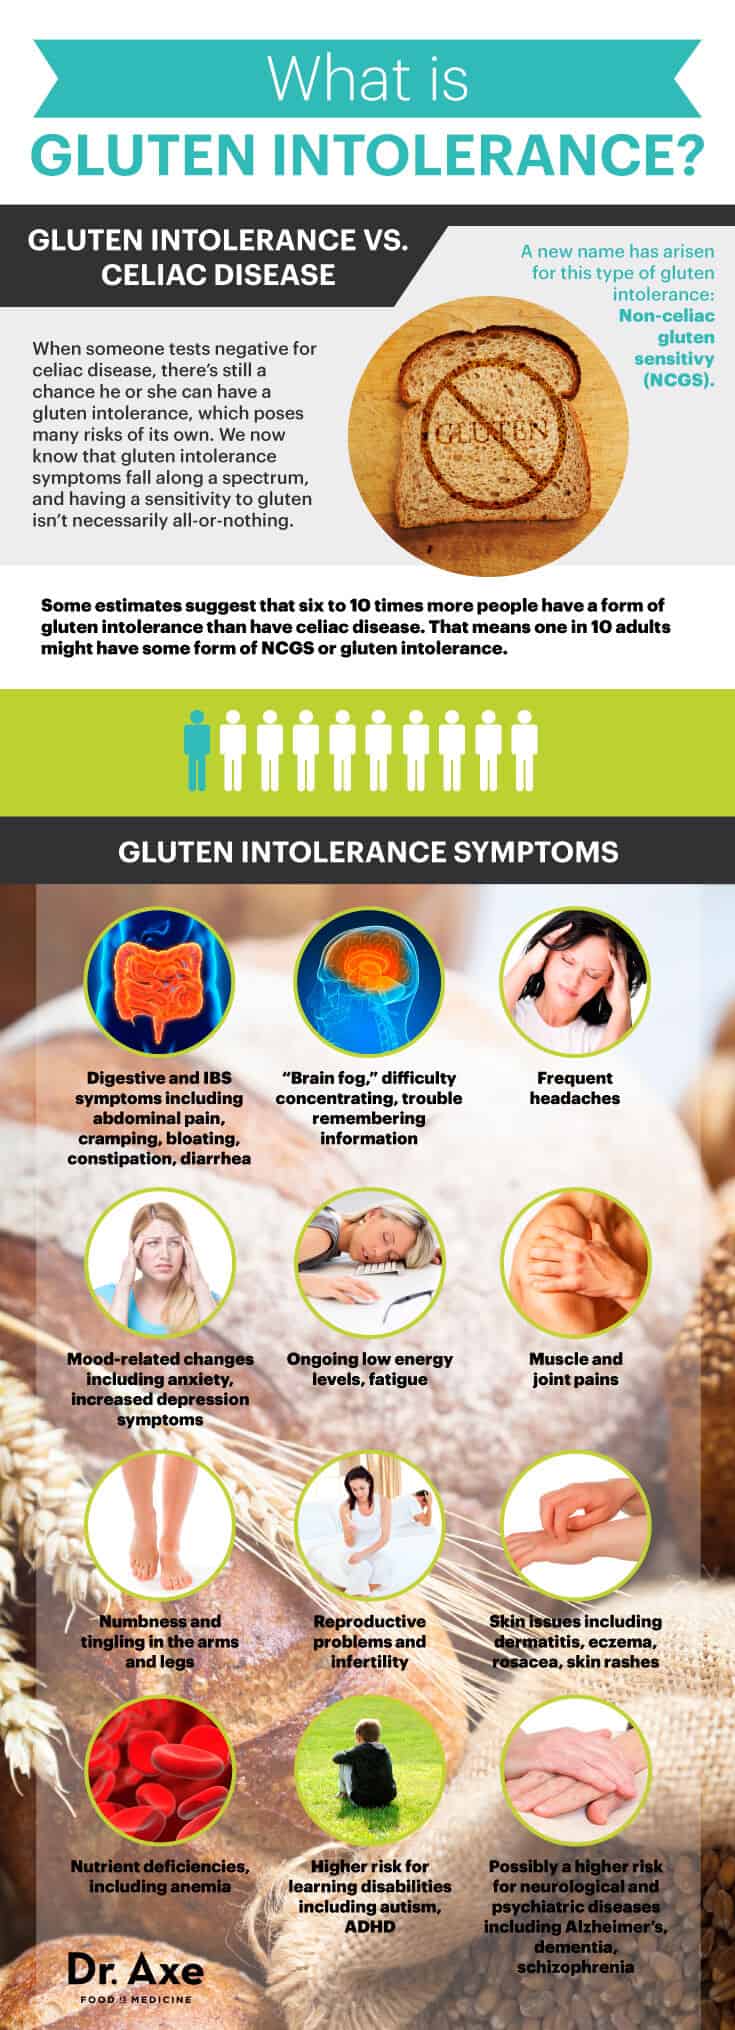 Gluten Intolerance Symptoms & Treatment Methods - Dr. Axe